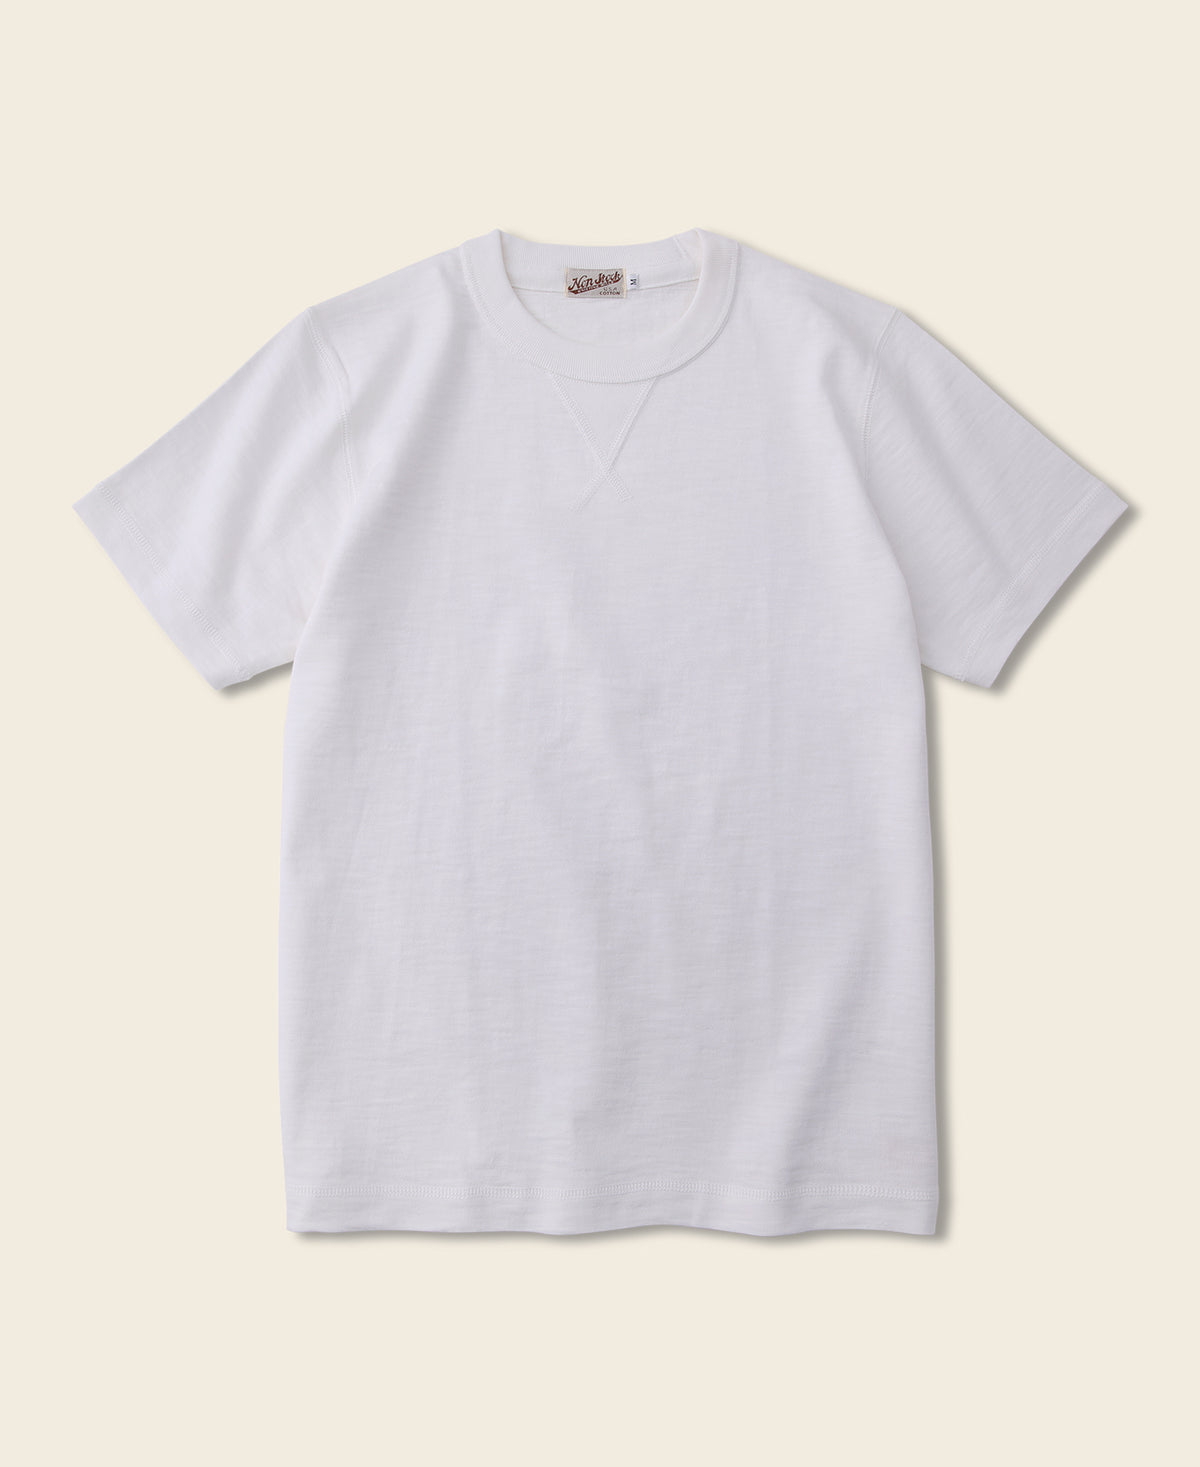 10.5 oz US Cotton Tubular Gusset T-Shirt - White